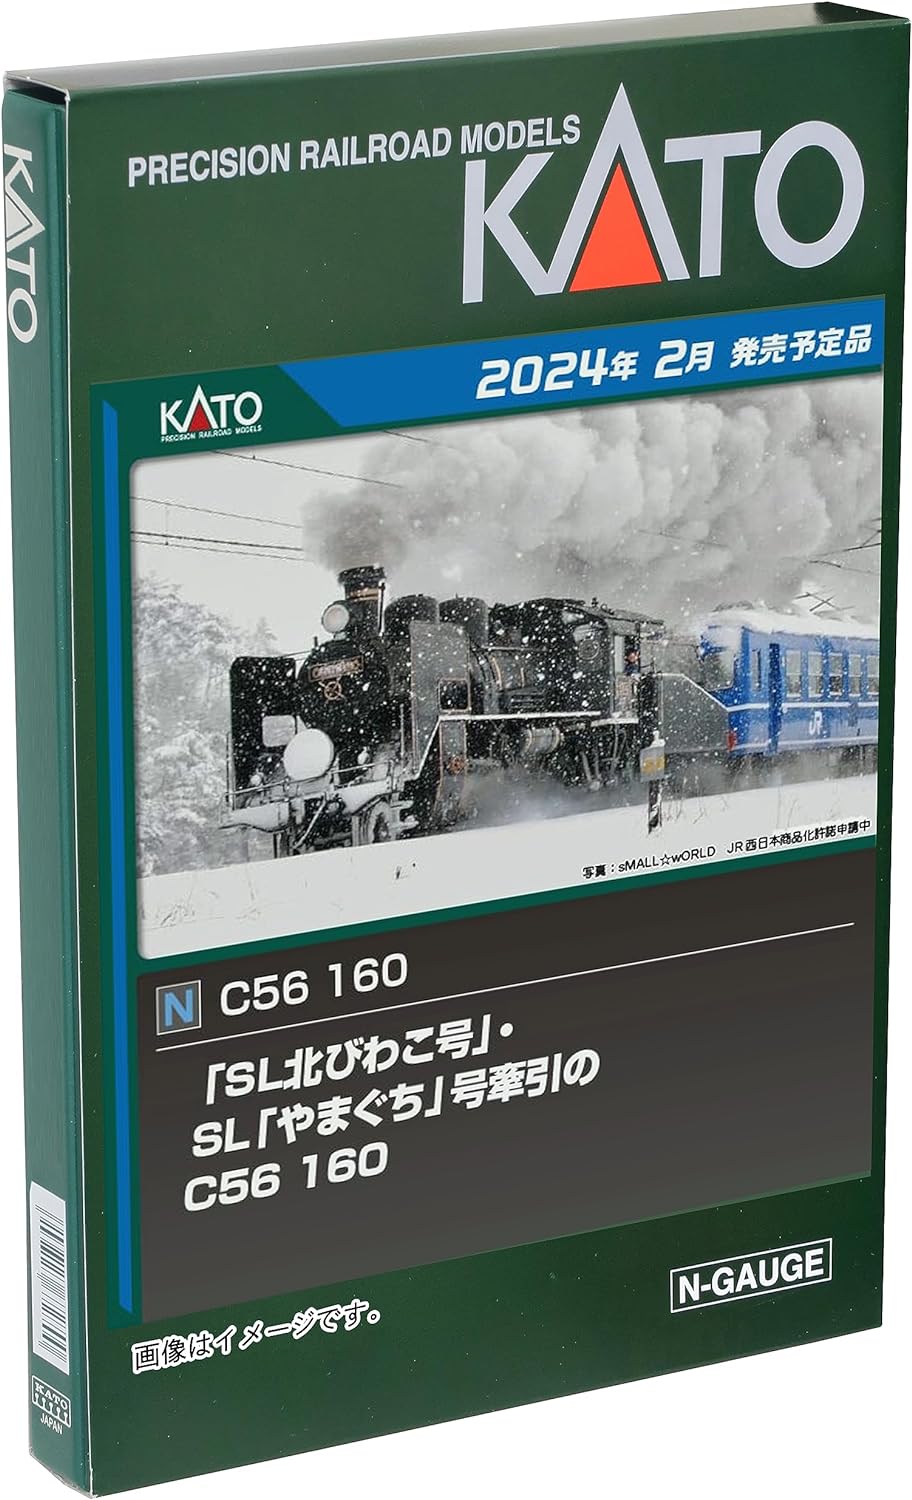 KATO 2020-2 N Gauge C56 160 Model Railway Steam Locomotive - BanzaiHobby